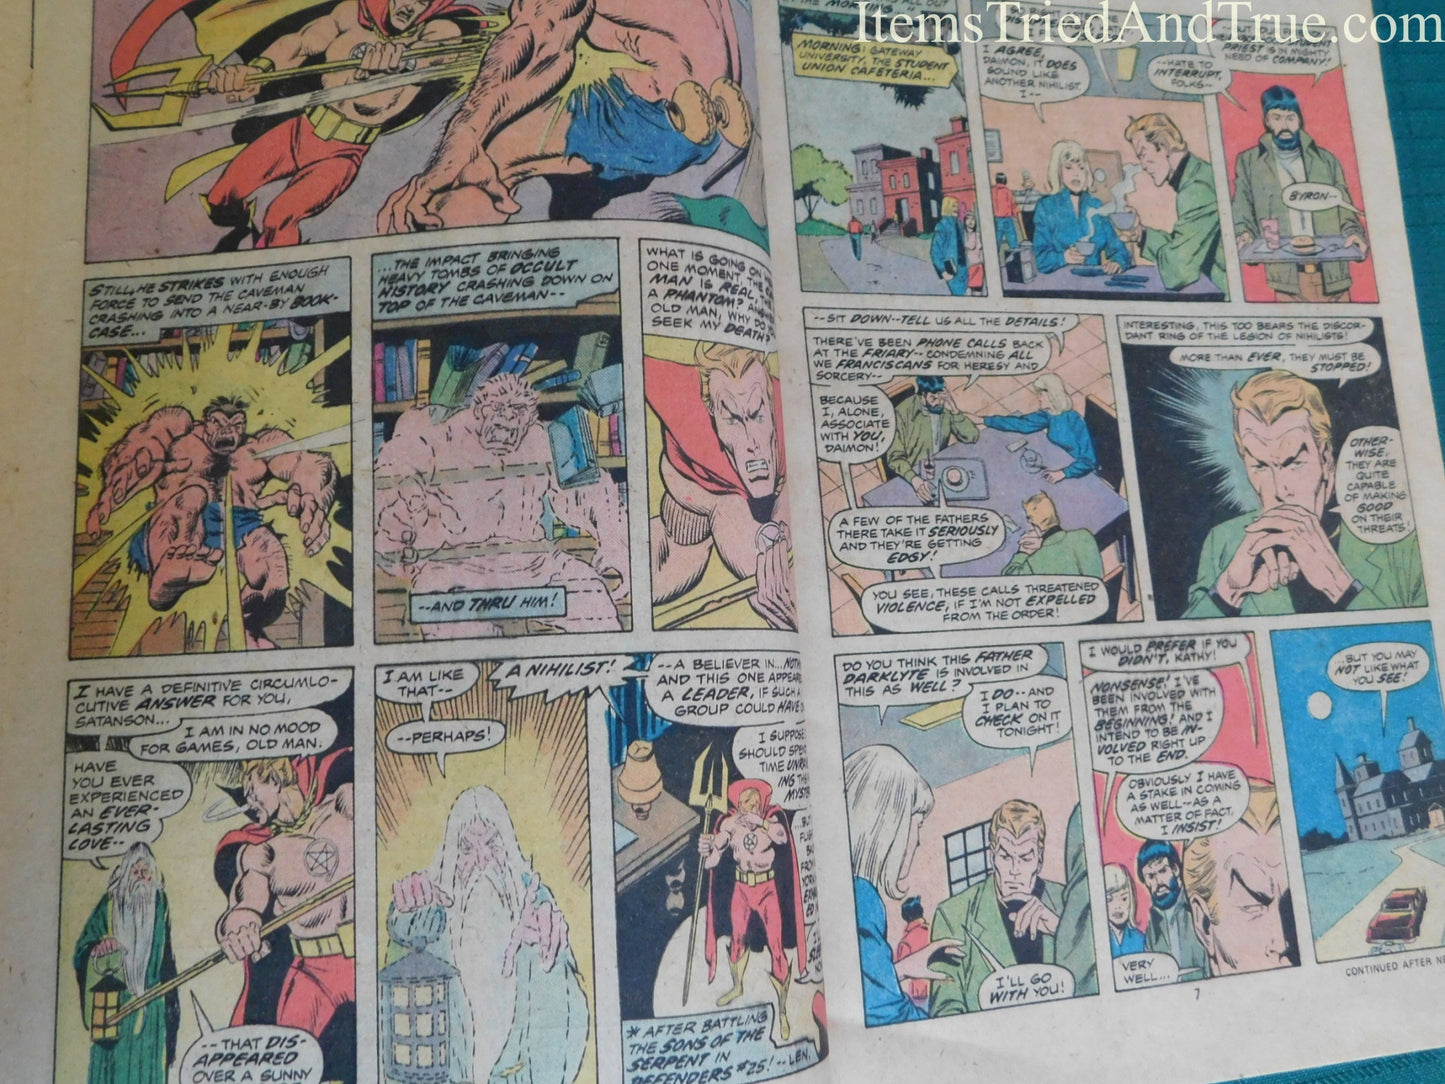 Marvel Son of Satan comic August 1975 GUC